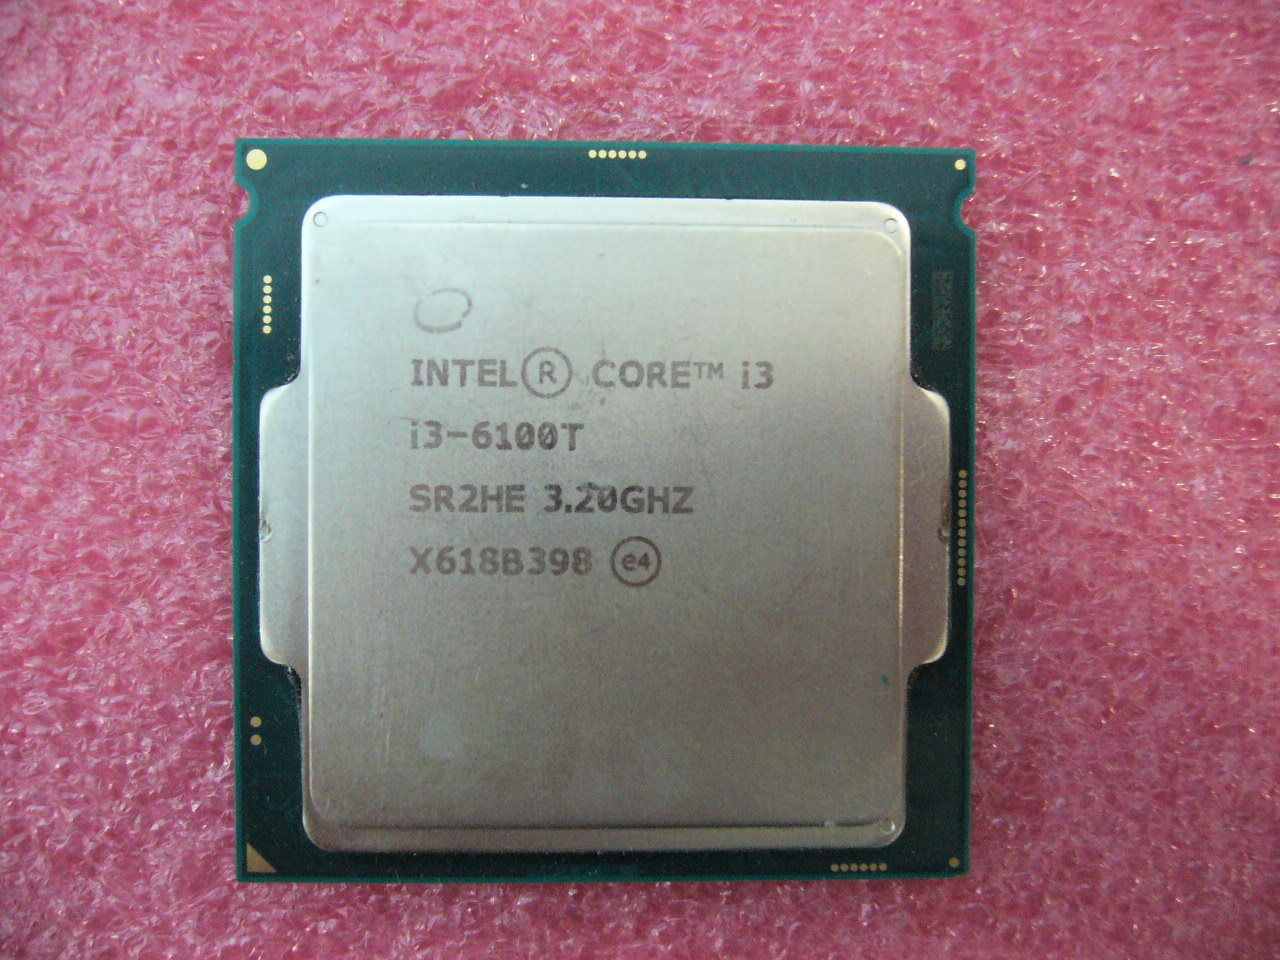 QTY 1x Intel CPU i3-6100T Dual-Cores 3.20Ghz 3MB LGA1151 SR2HE WORKING